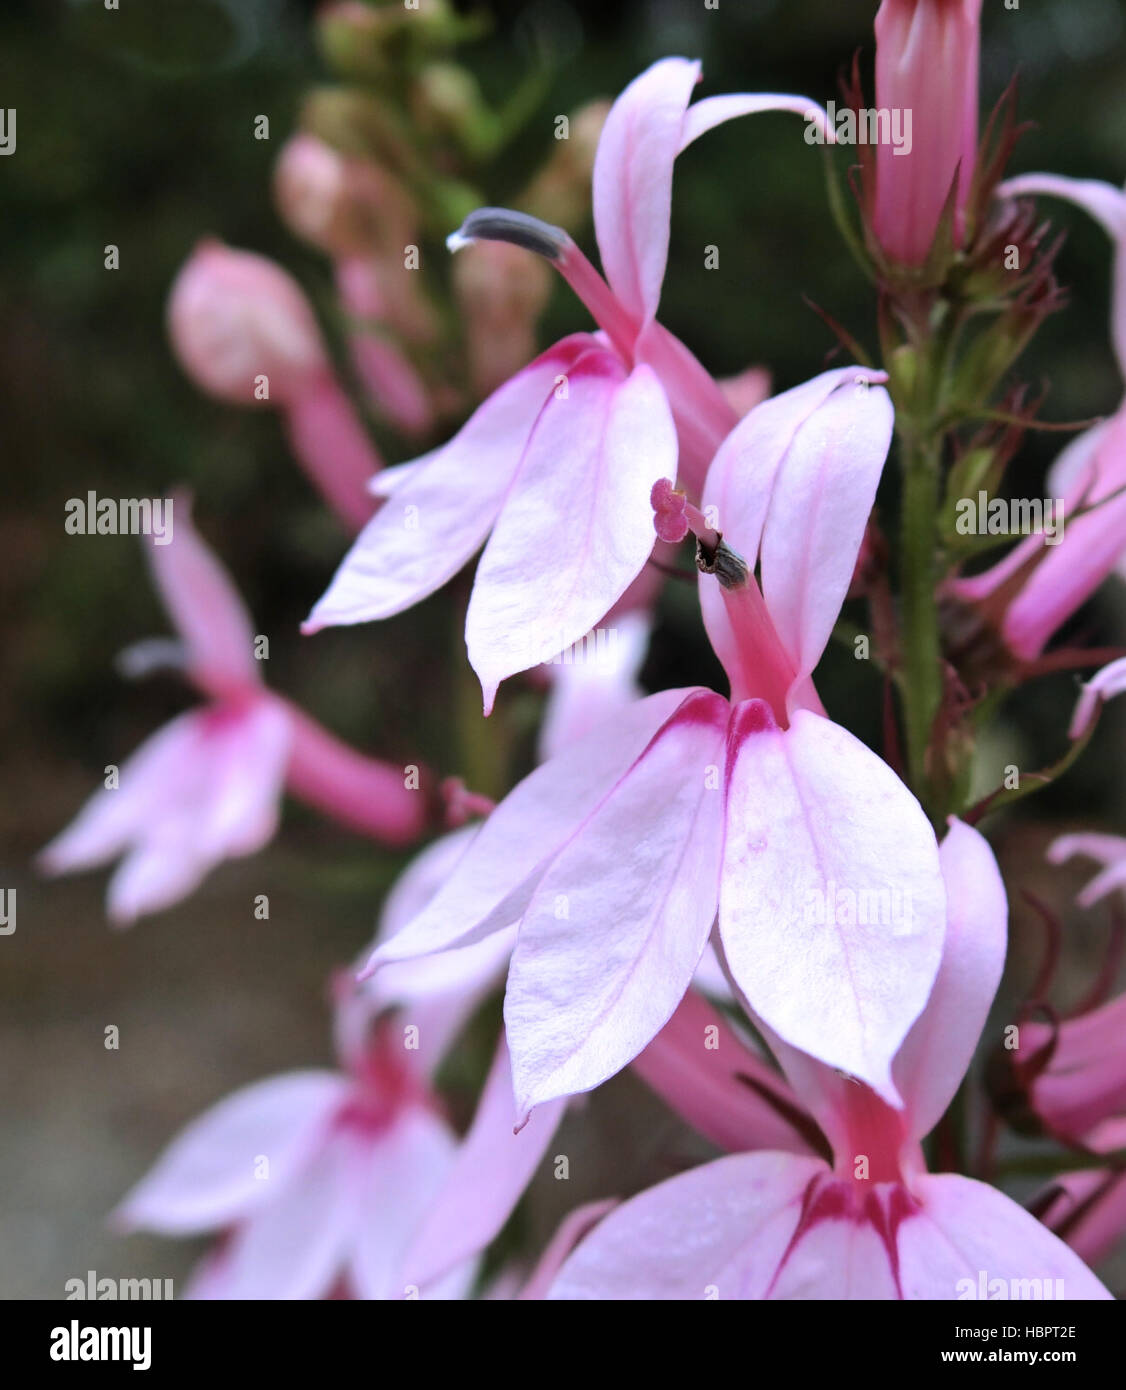 Lobelia 'Compton Pink' in Flower Stock Photo